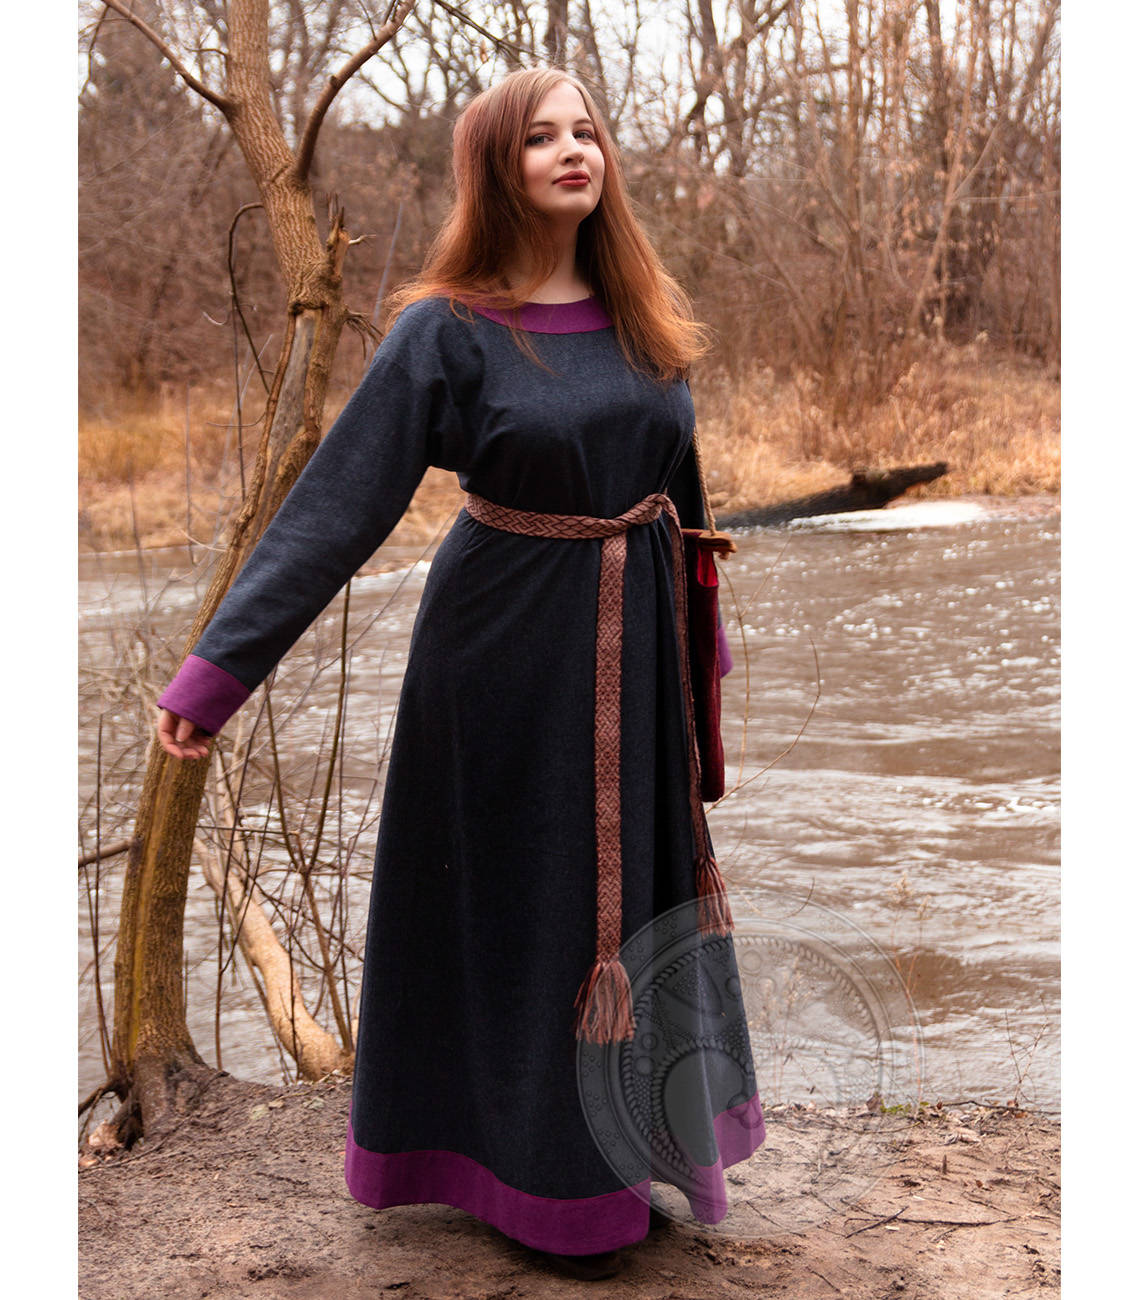 medieval lady  Medieval fashion, Medieval dress, Dress